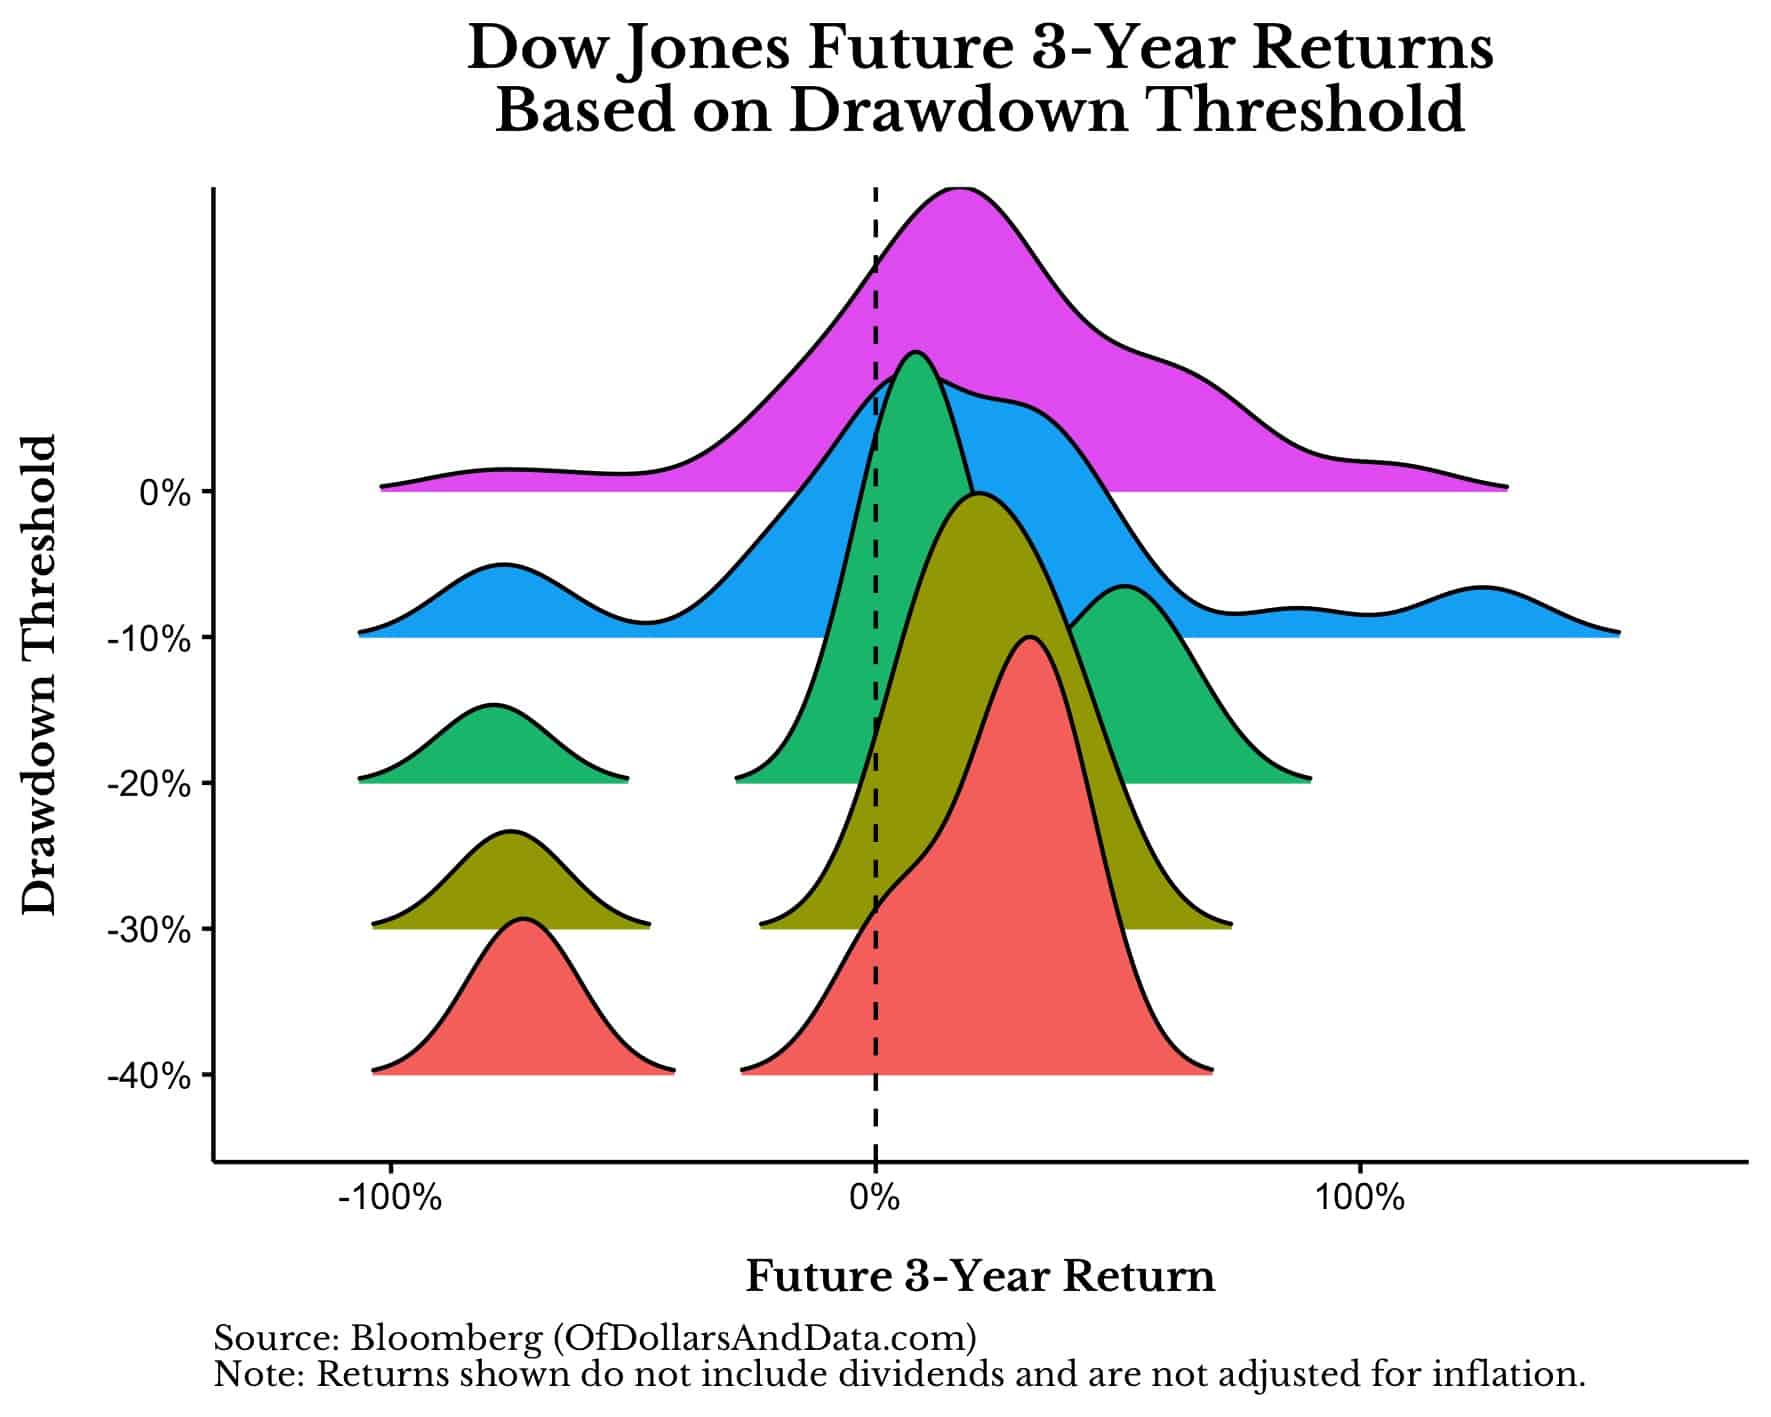 Distribution of Dow Jones Industrial  future 3-year returns based on drawdown threshold.